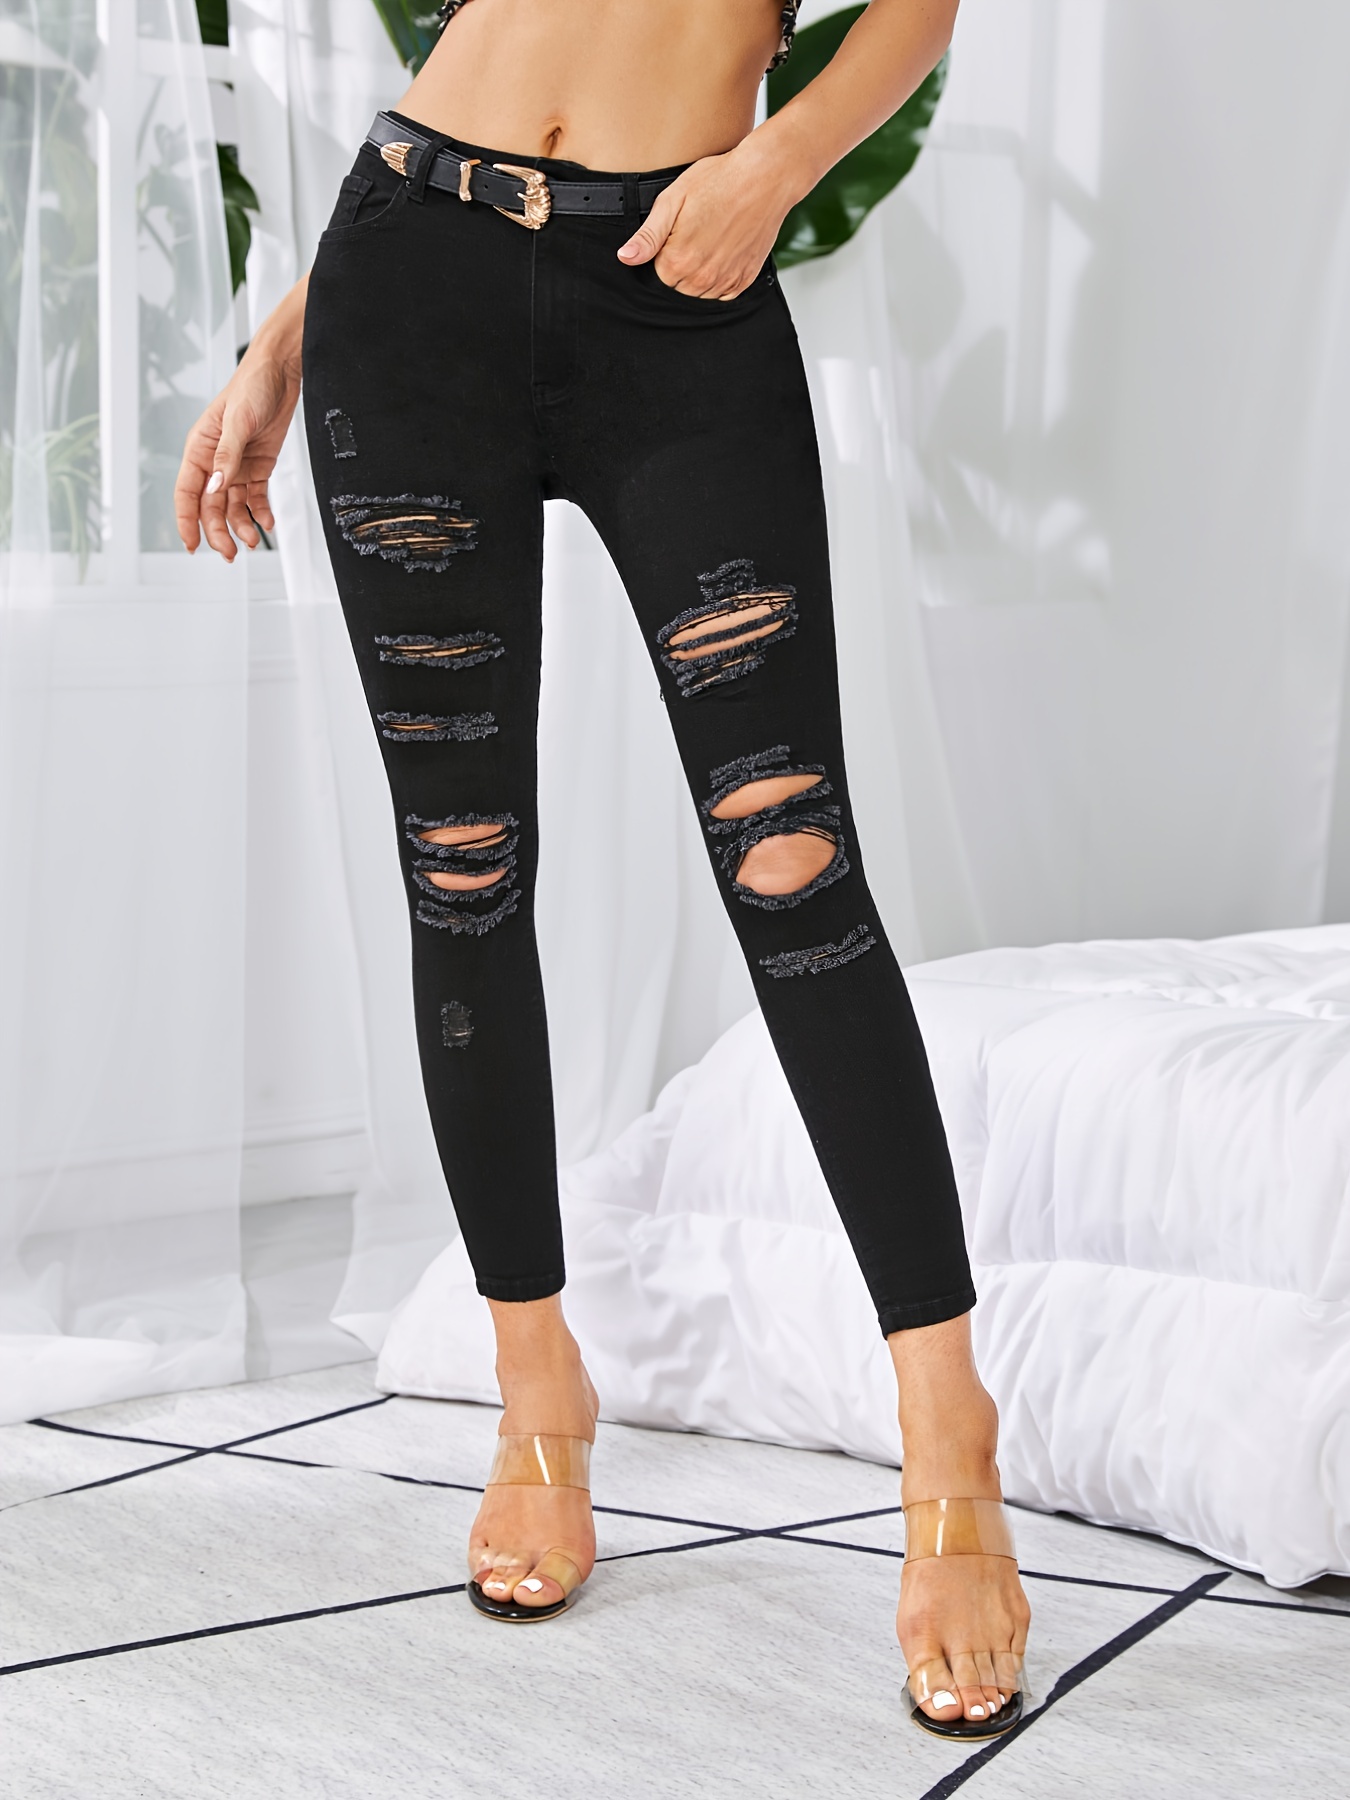 Pantalones de mezclilla negros lavados clásicos, pantalones de mezclilla de  tiro alto con bolsillos oblicuos de cintura alta, jeans y ropa de mezclill